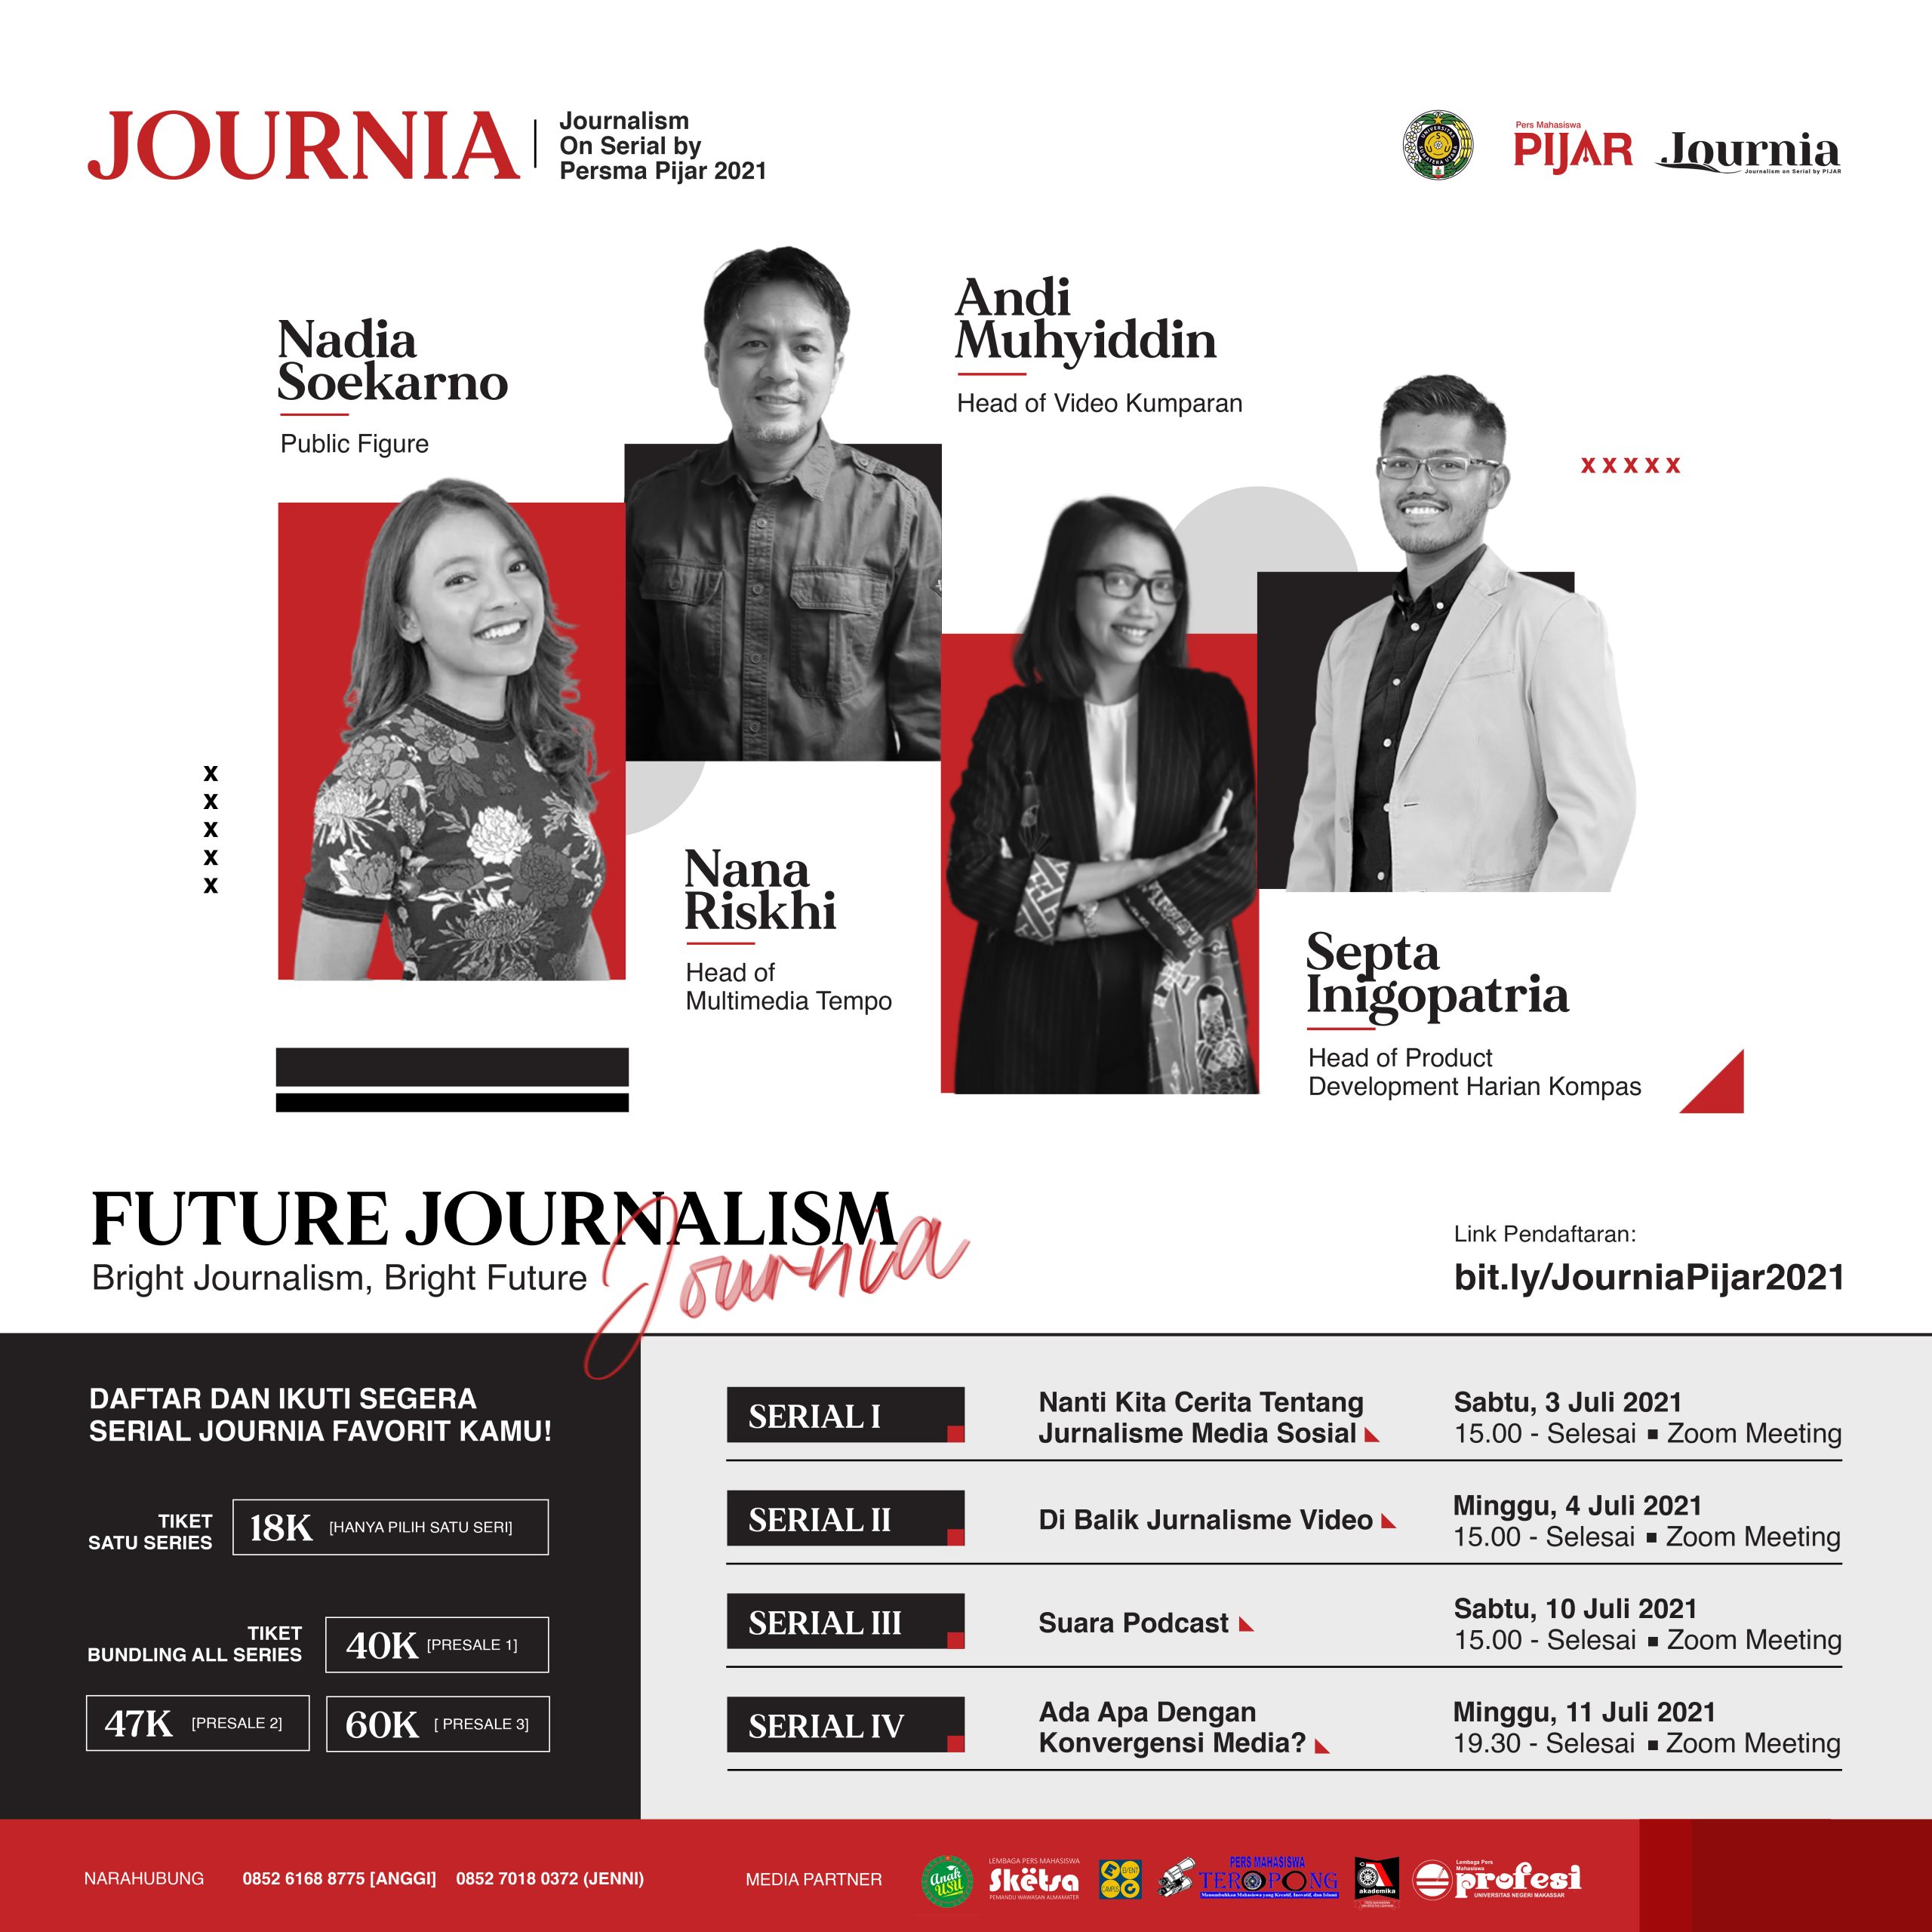 [Media Partner] Journalism On Serial (Journia) by Persma Pijar 2021